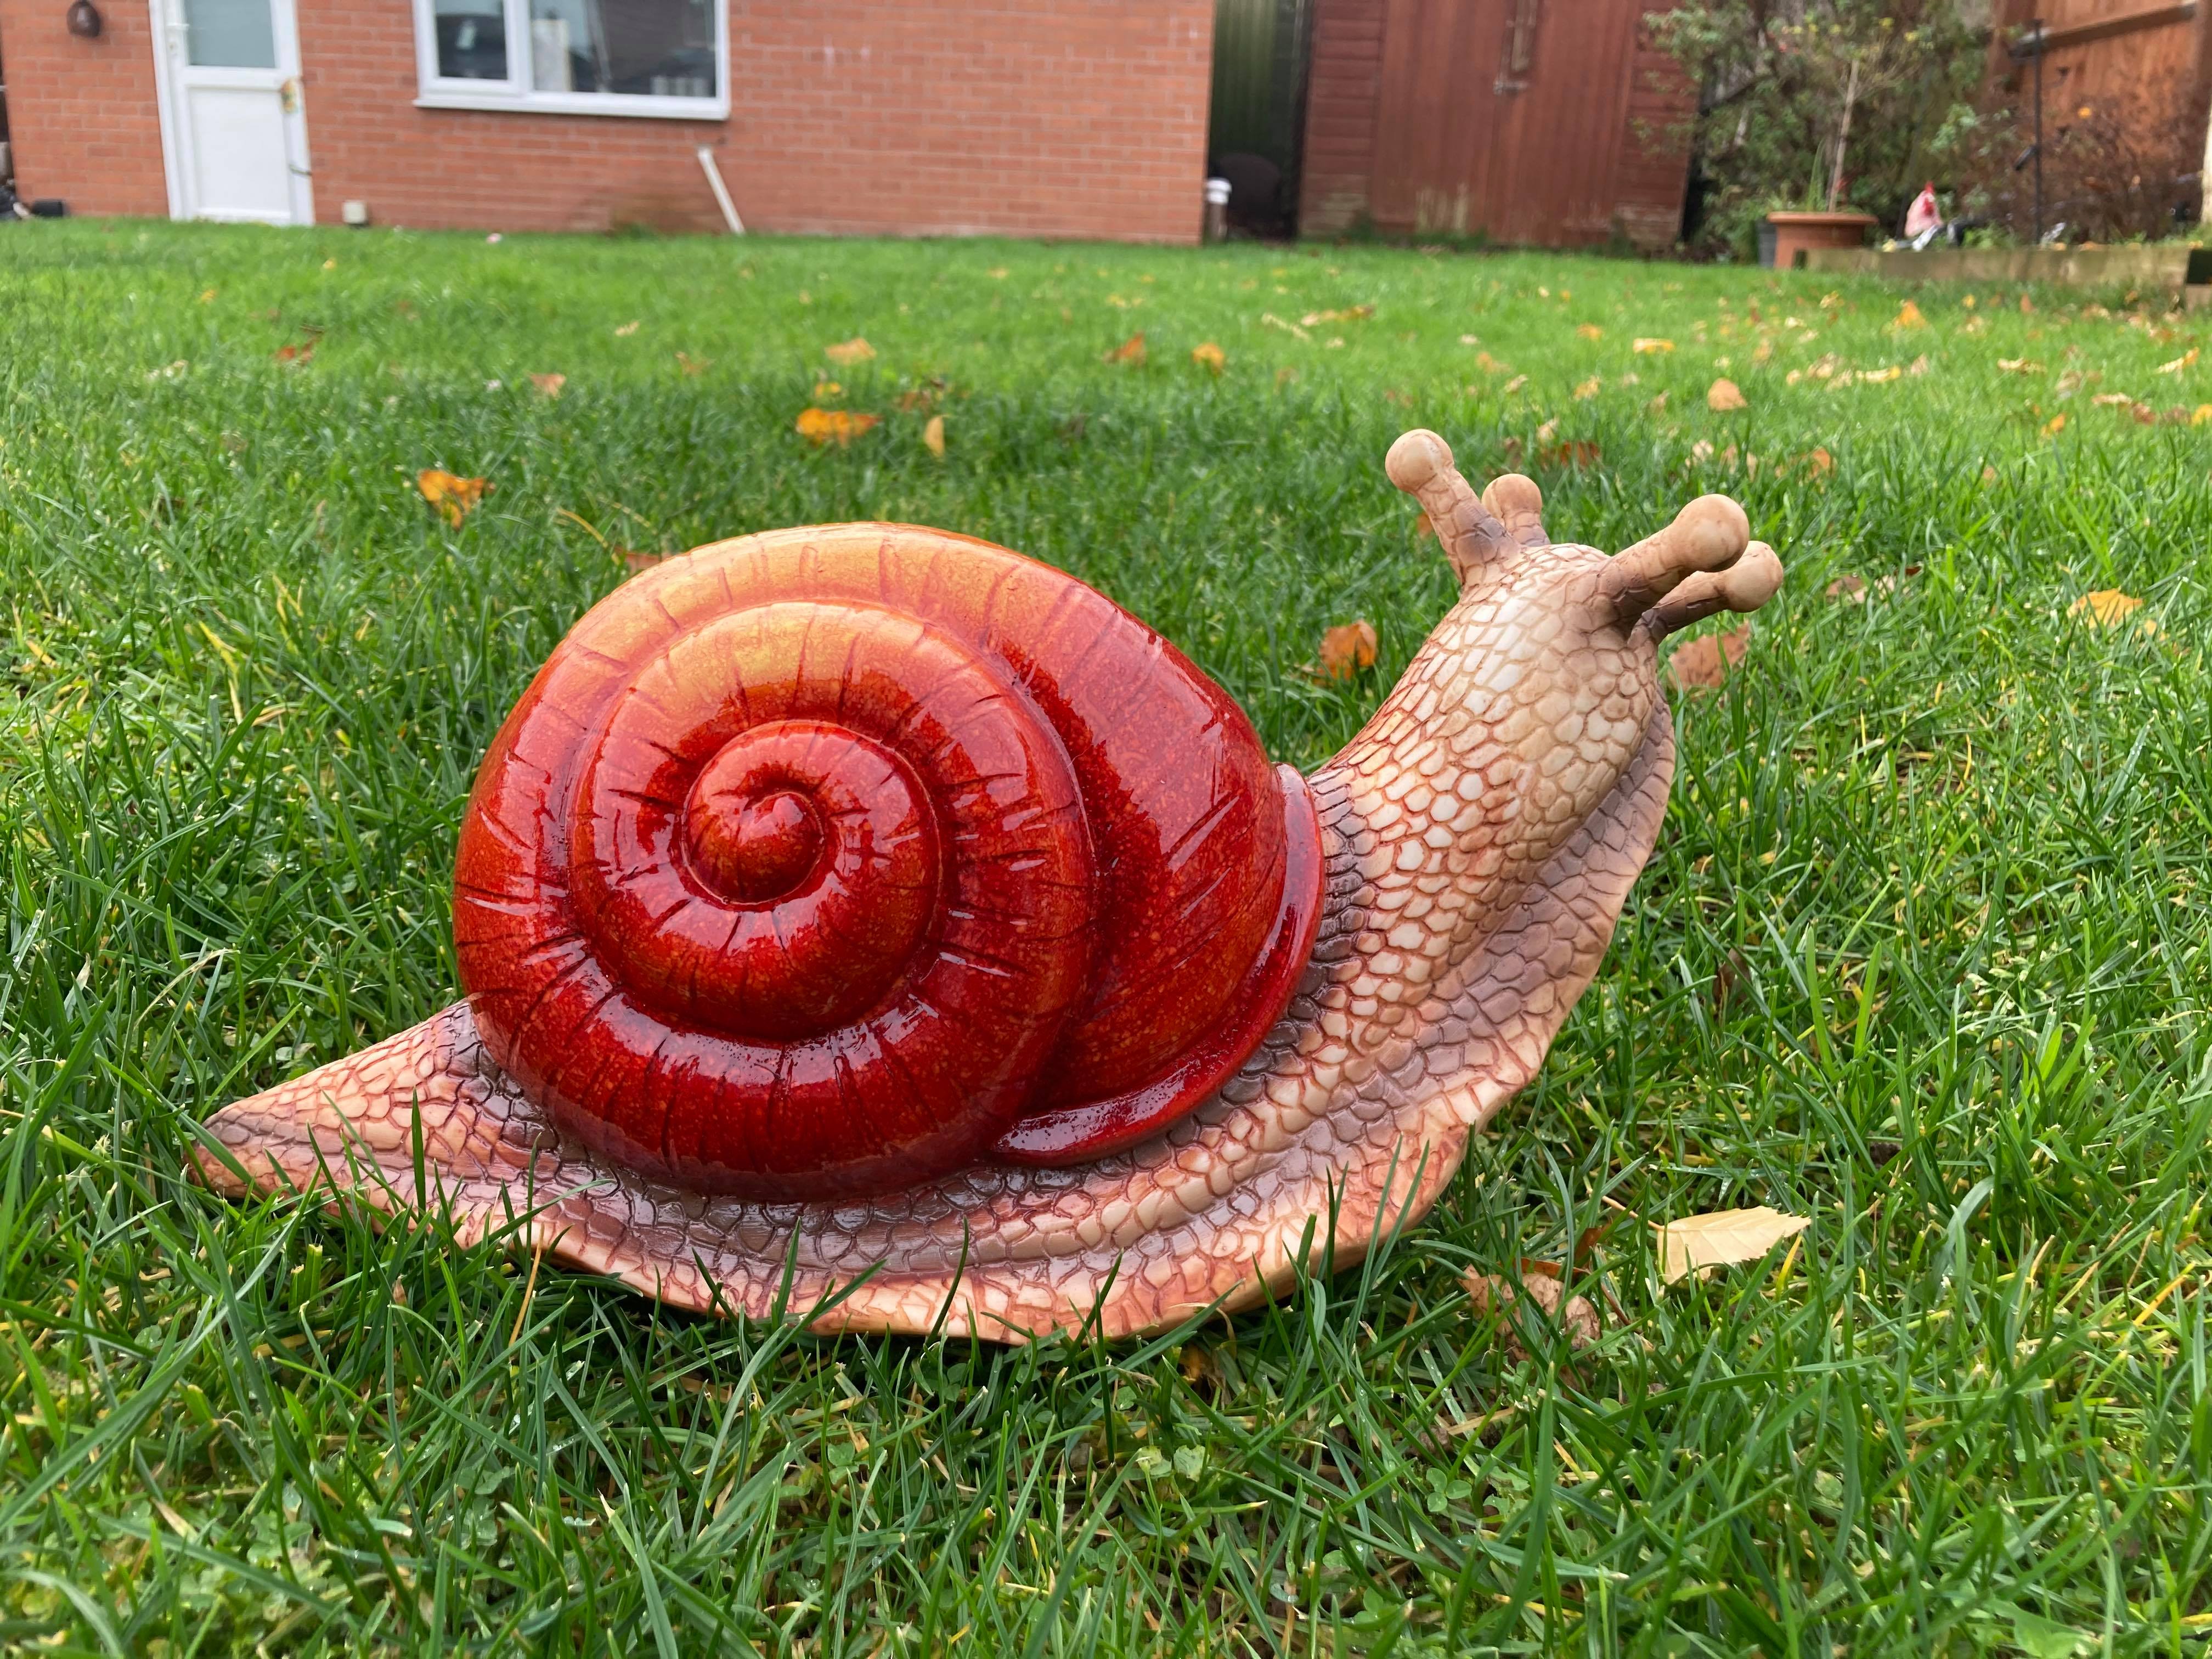 Giant Snail